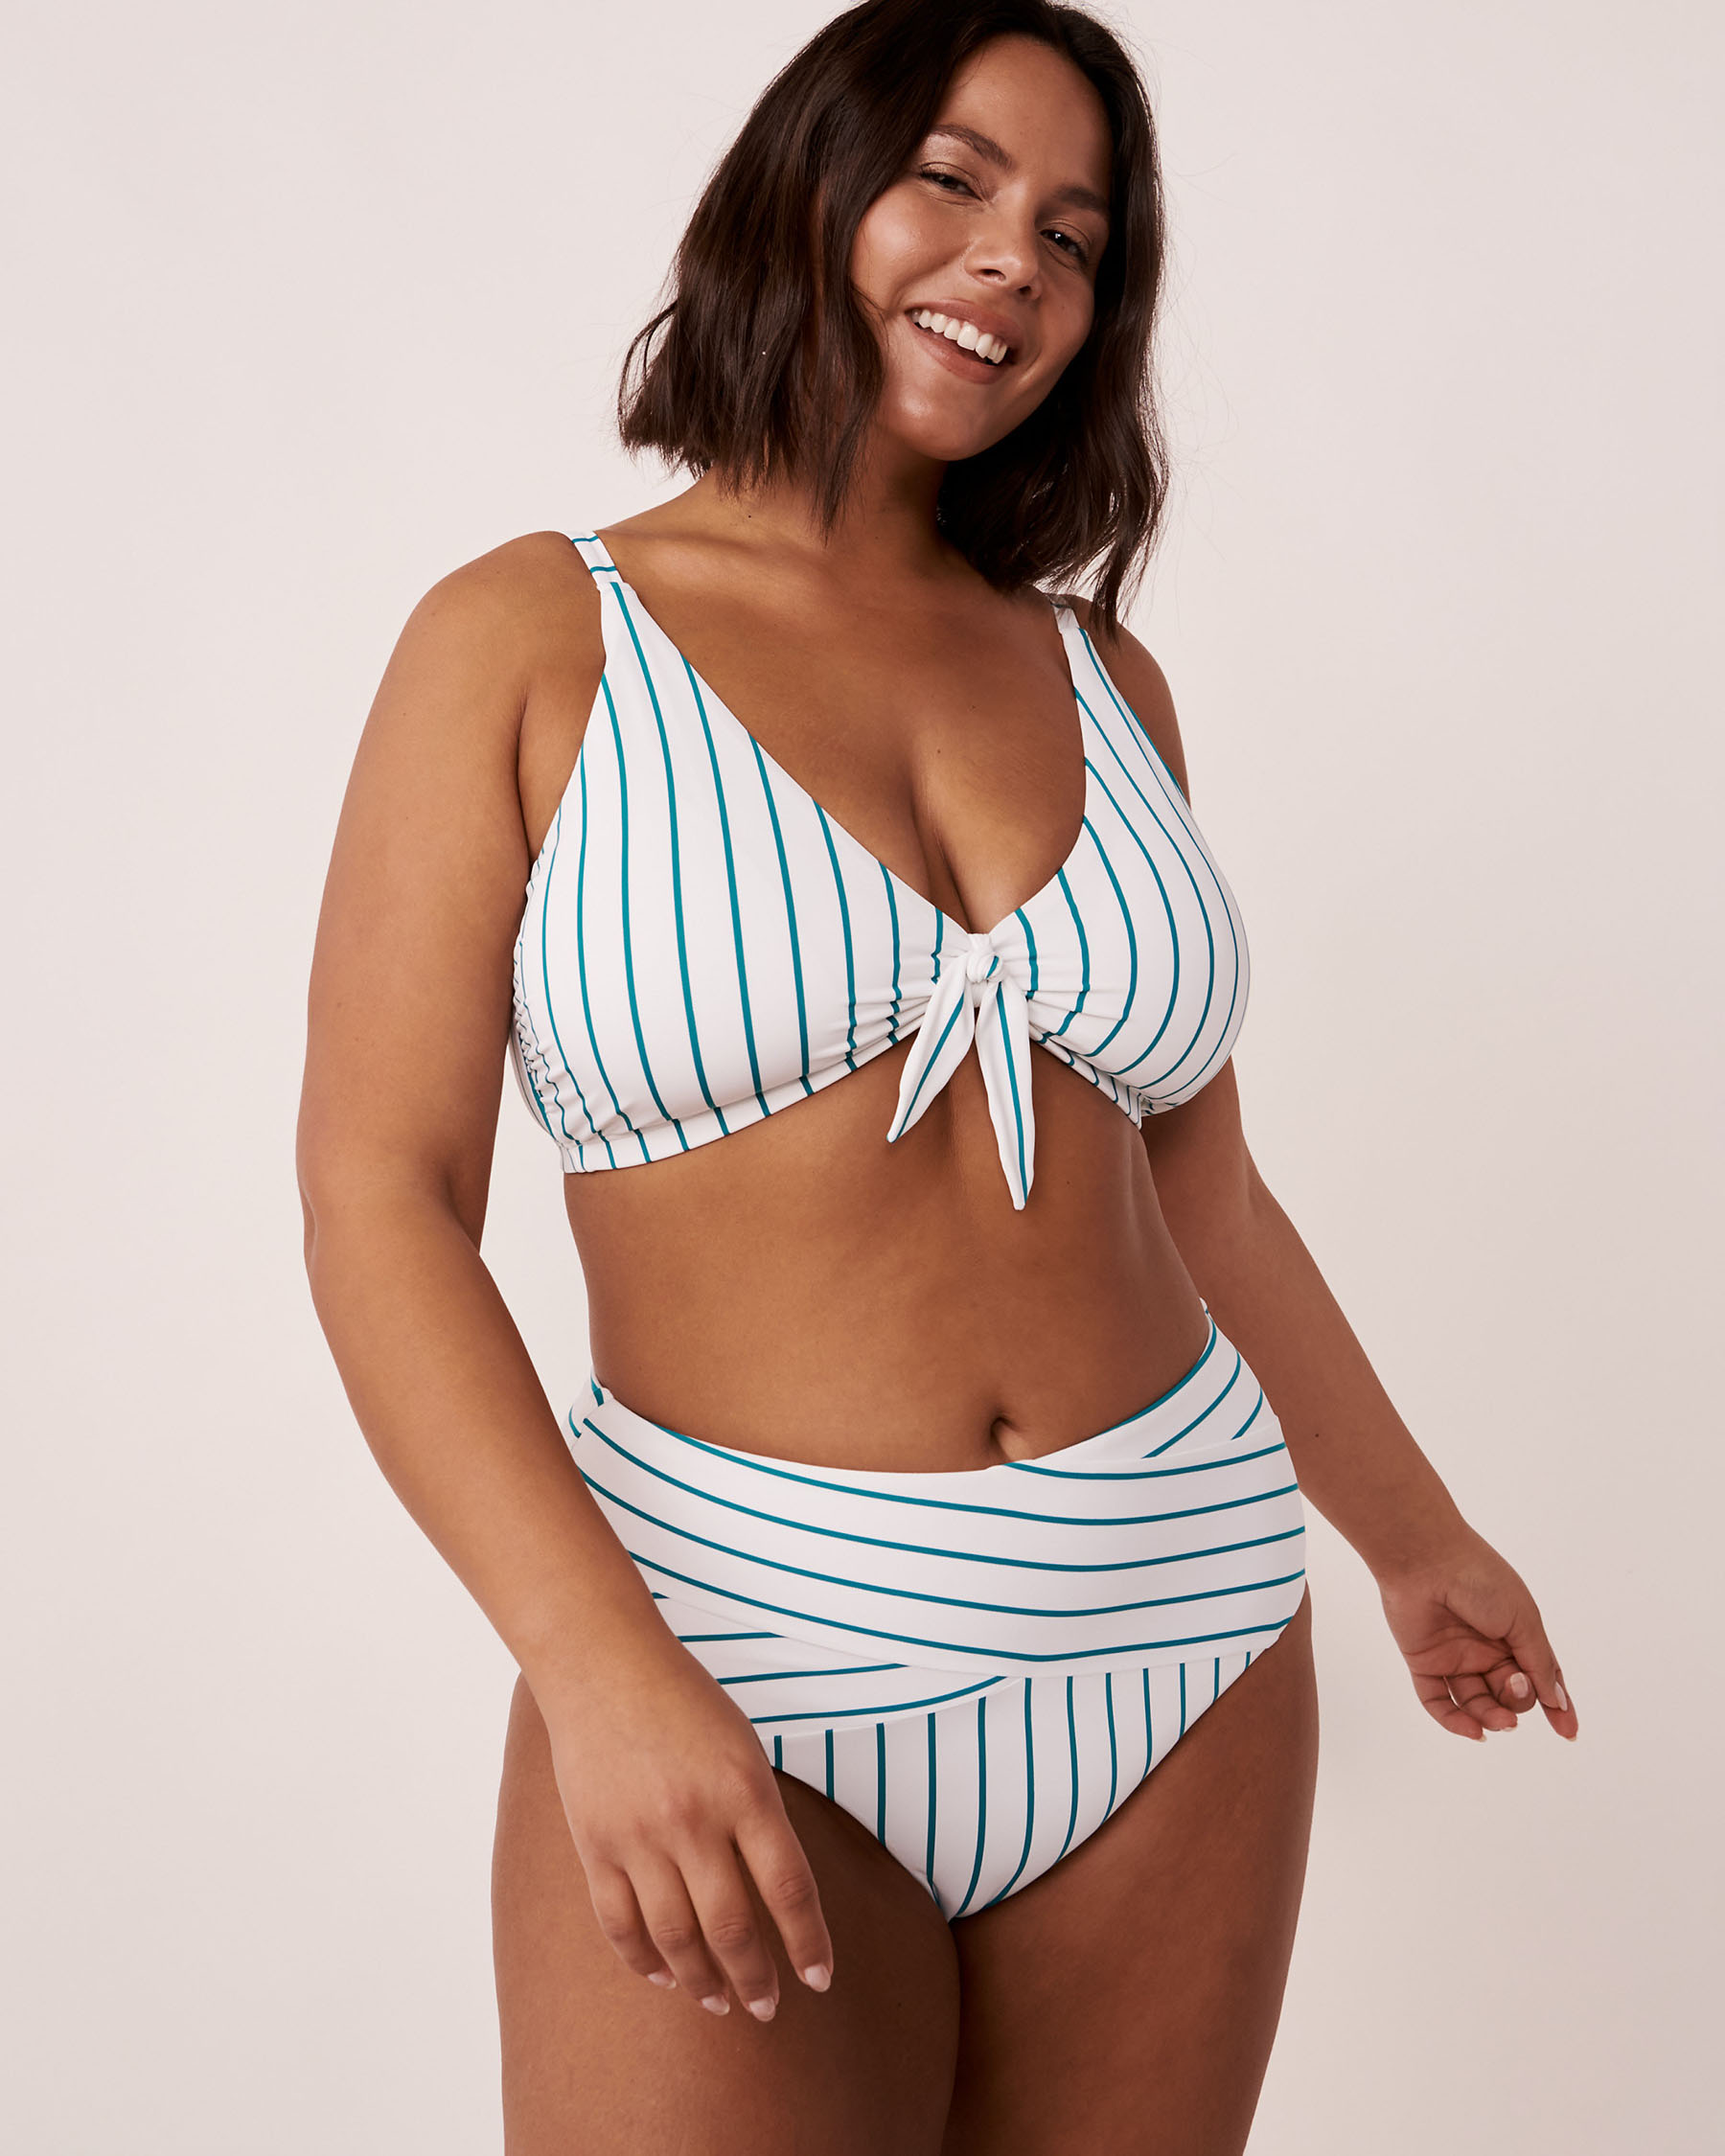 LA VIE EN ROSE AQUA FANFARE STREAKS Recycled Fibers D Cup Triangle Bikini Top Stripes 70200067 - View4